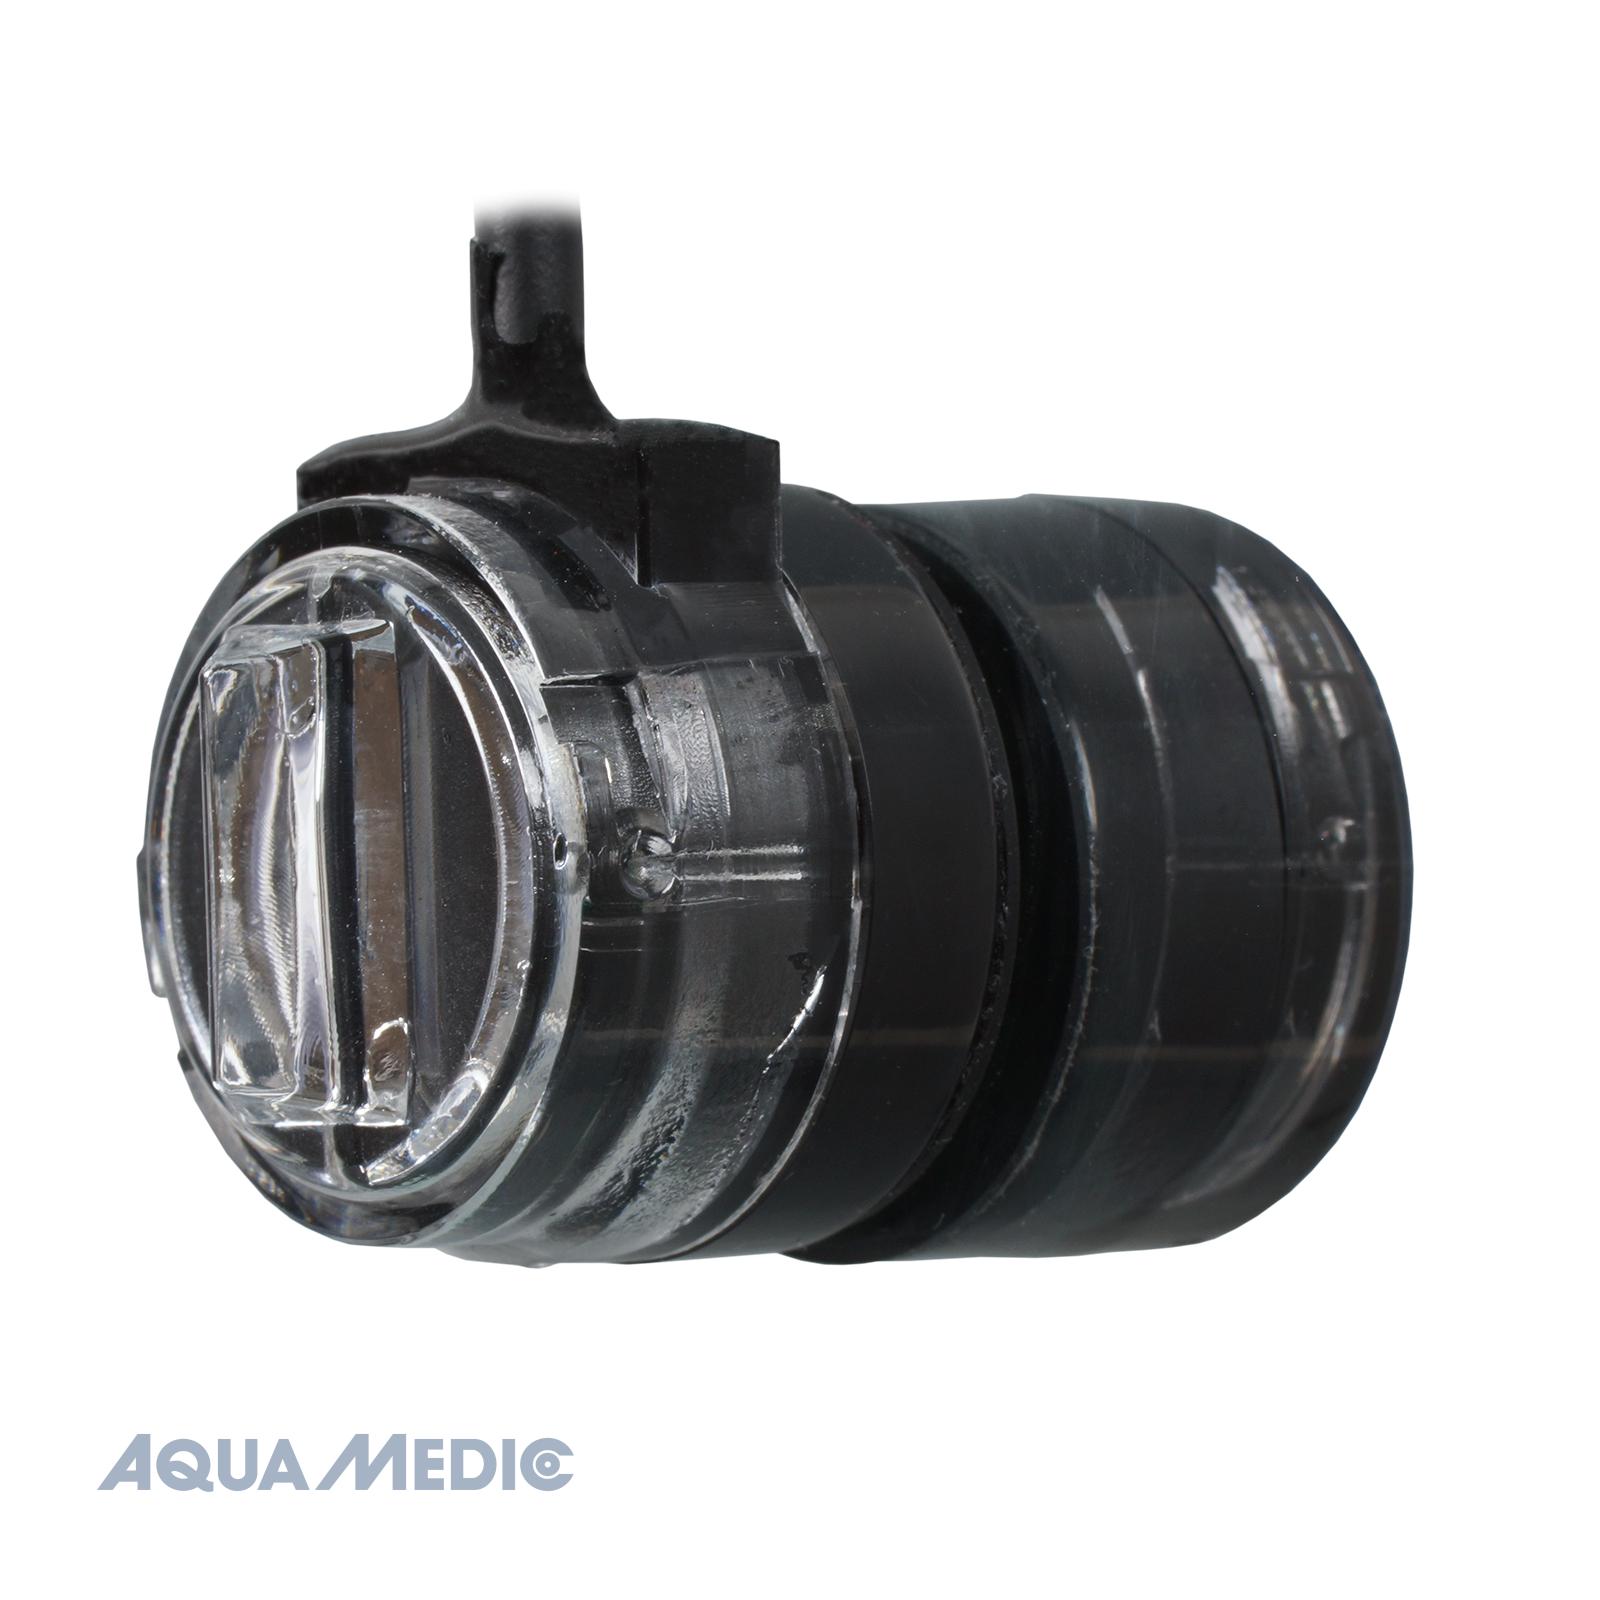 Автодолив для аквариума Aqua Medic Refill System easy 54358